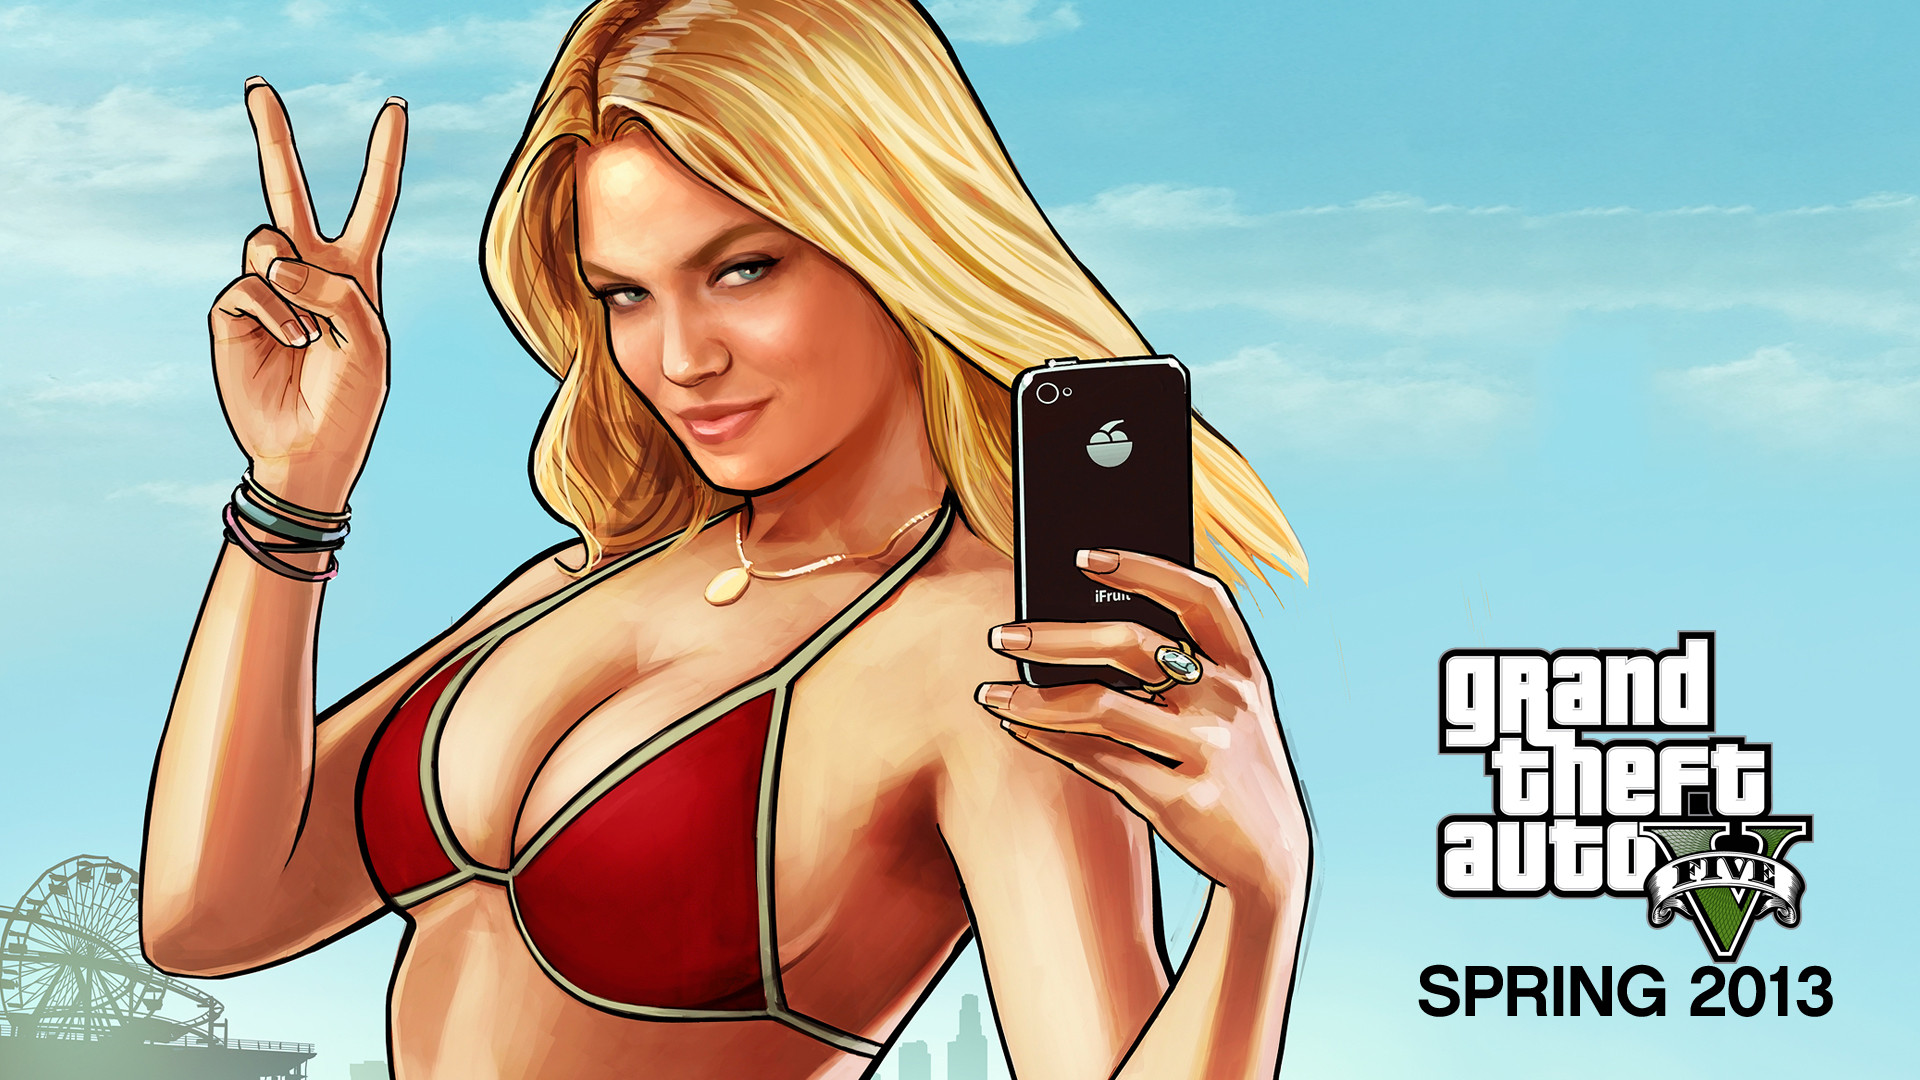 1920x1080 Grand Theft Auto GTA 5 Girl Character Wallpaper HD Wallpaper Grand Theft  Auto GTsadadsaA 5 |